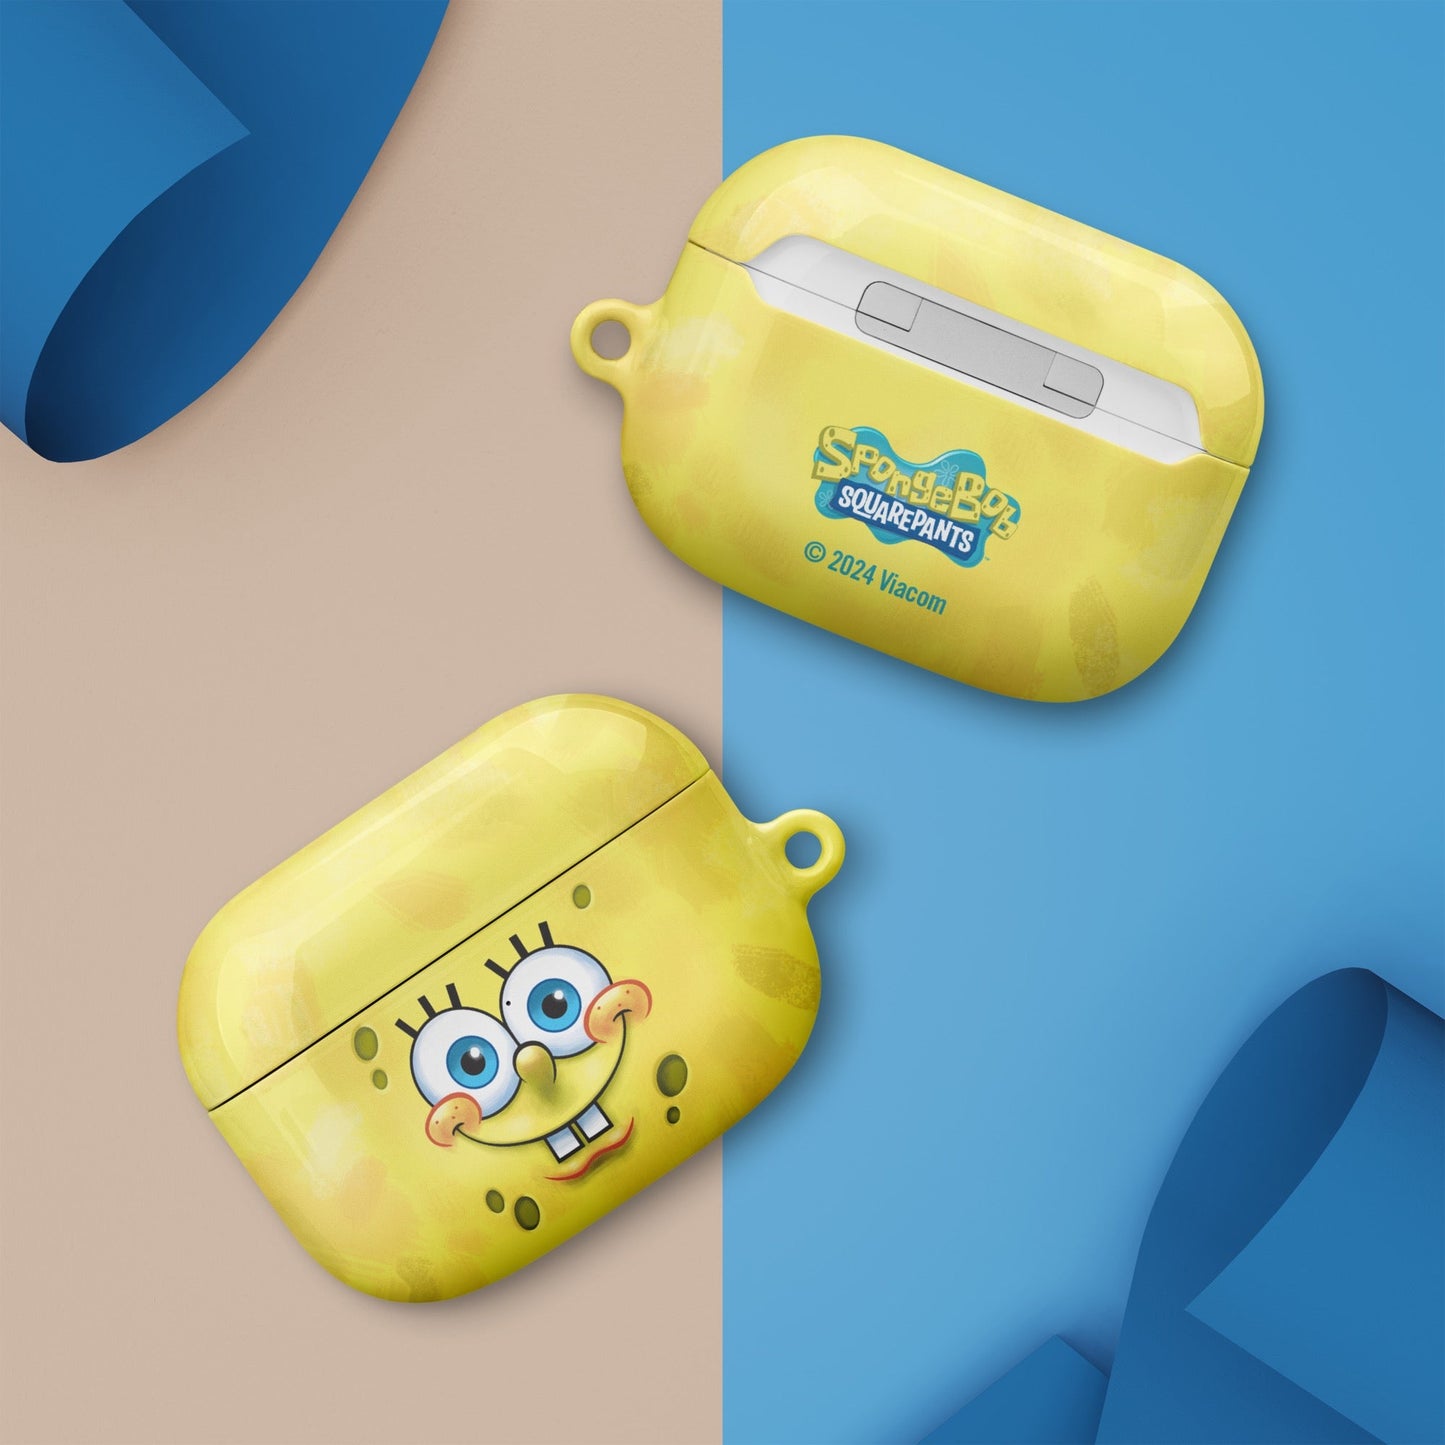 Spongebob Face Earbud Case - Paramount Shop